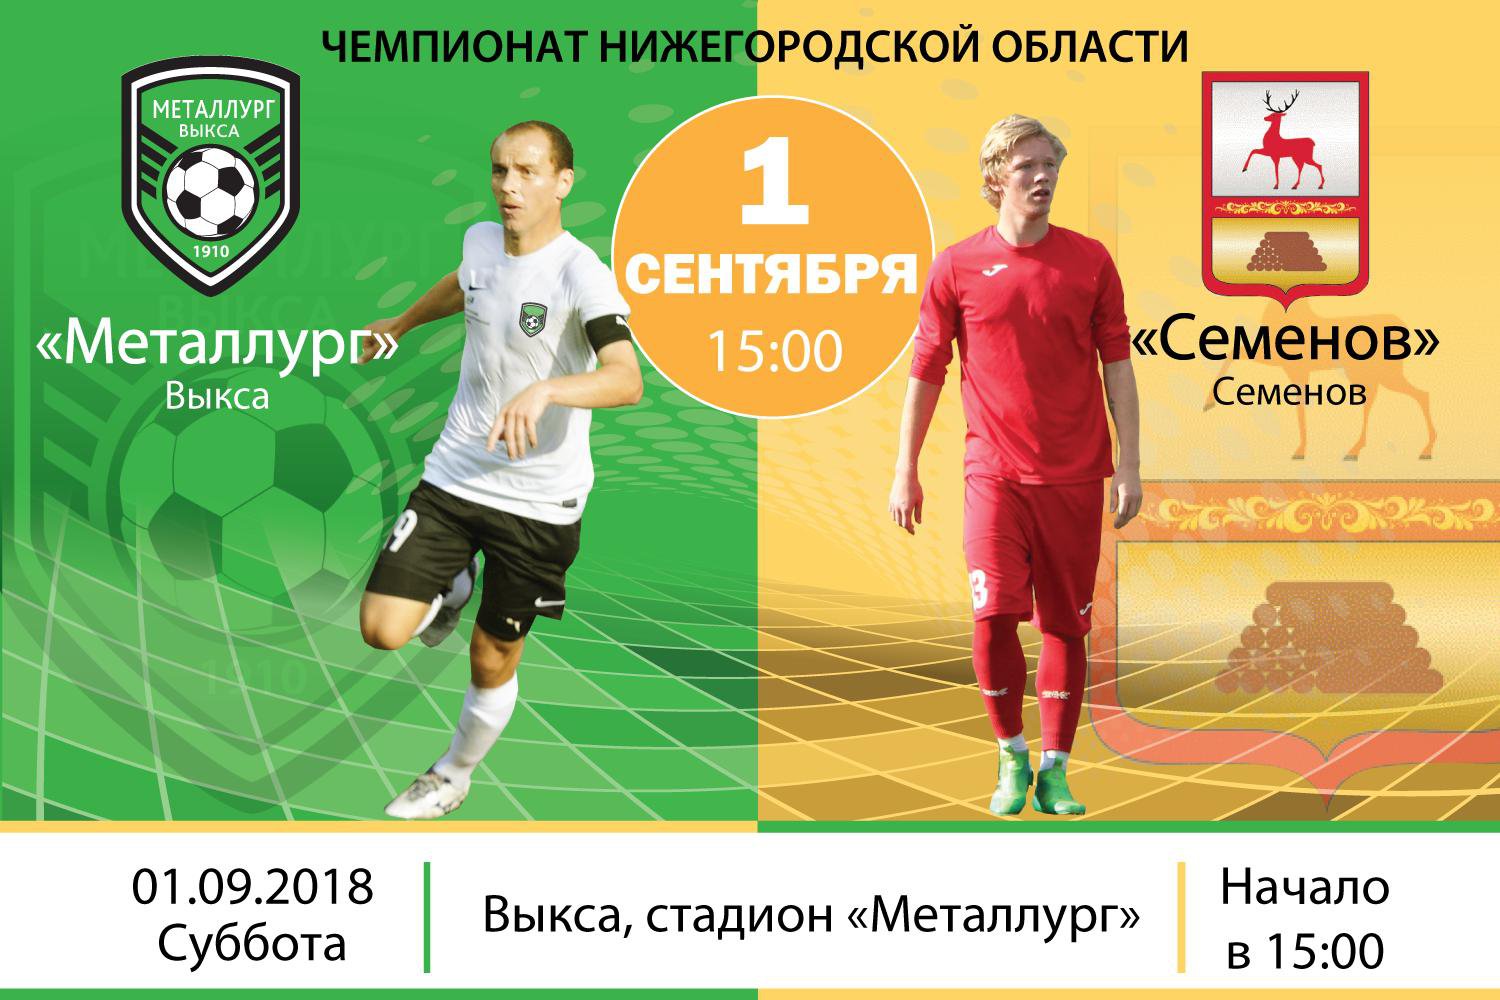 Футбол: «Металлург» Выкса — «Семенов»